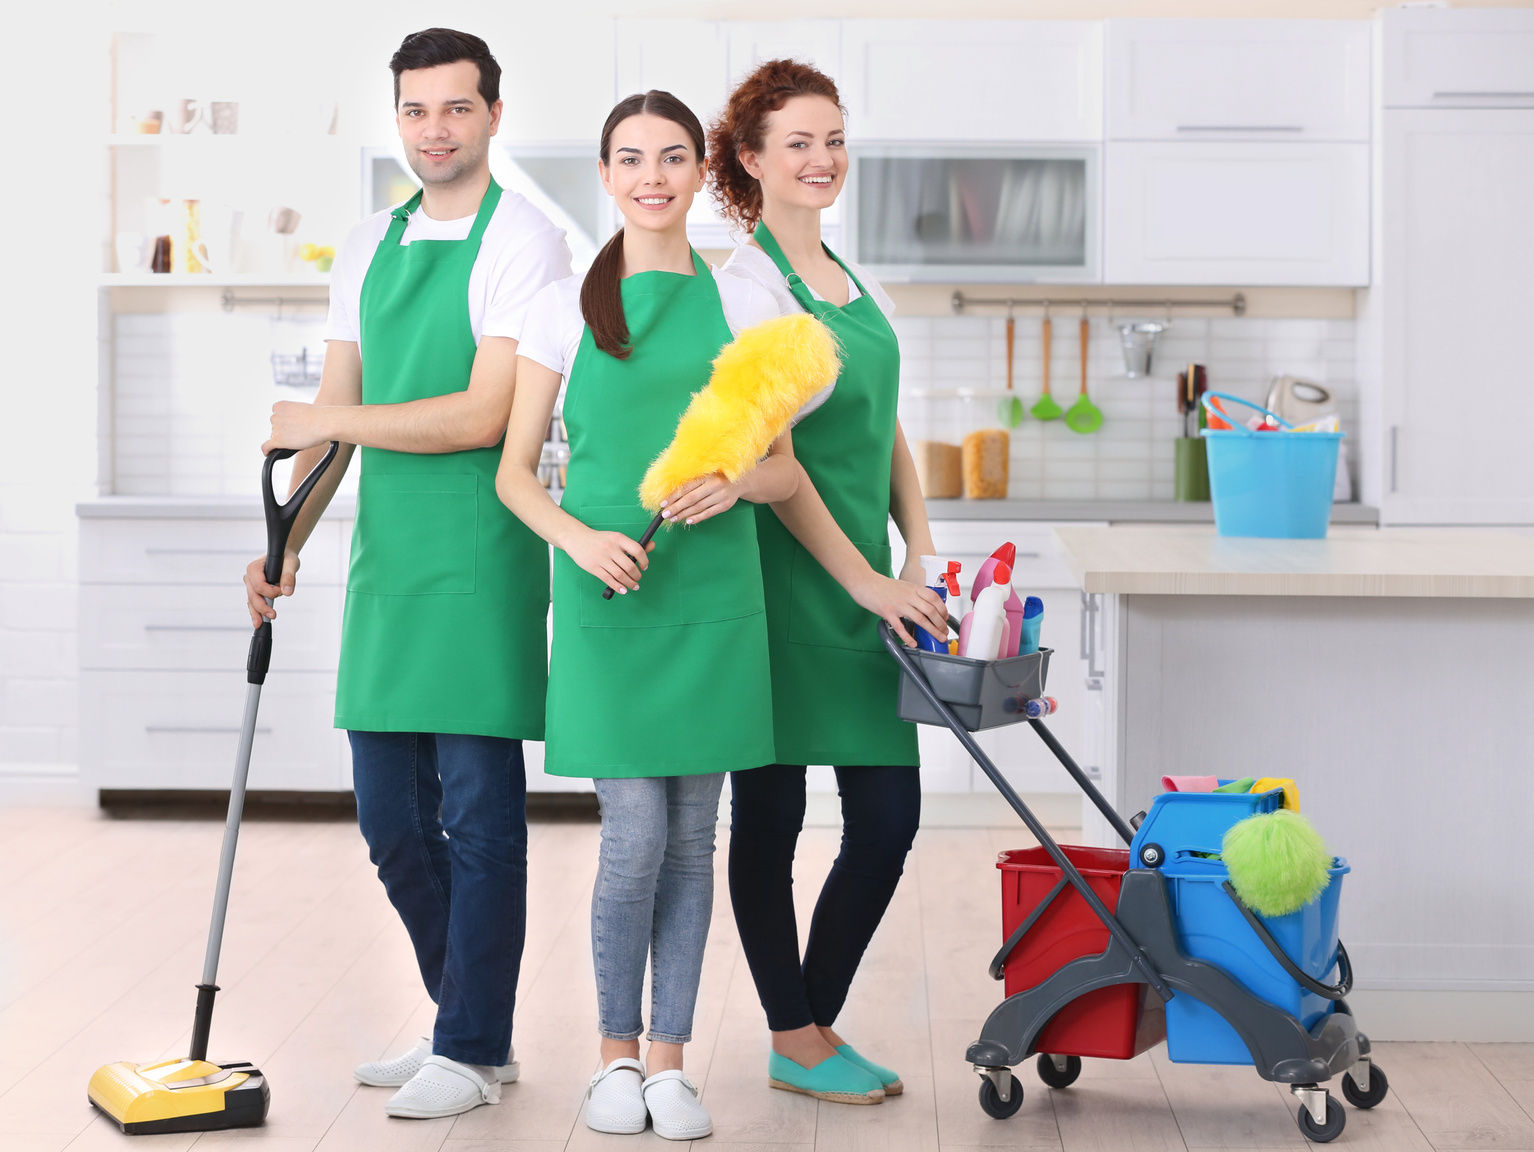 Cleaning Service Team Working in Kitchen